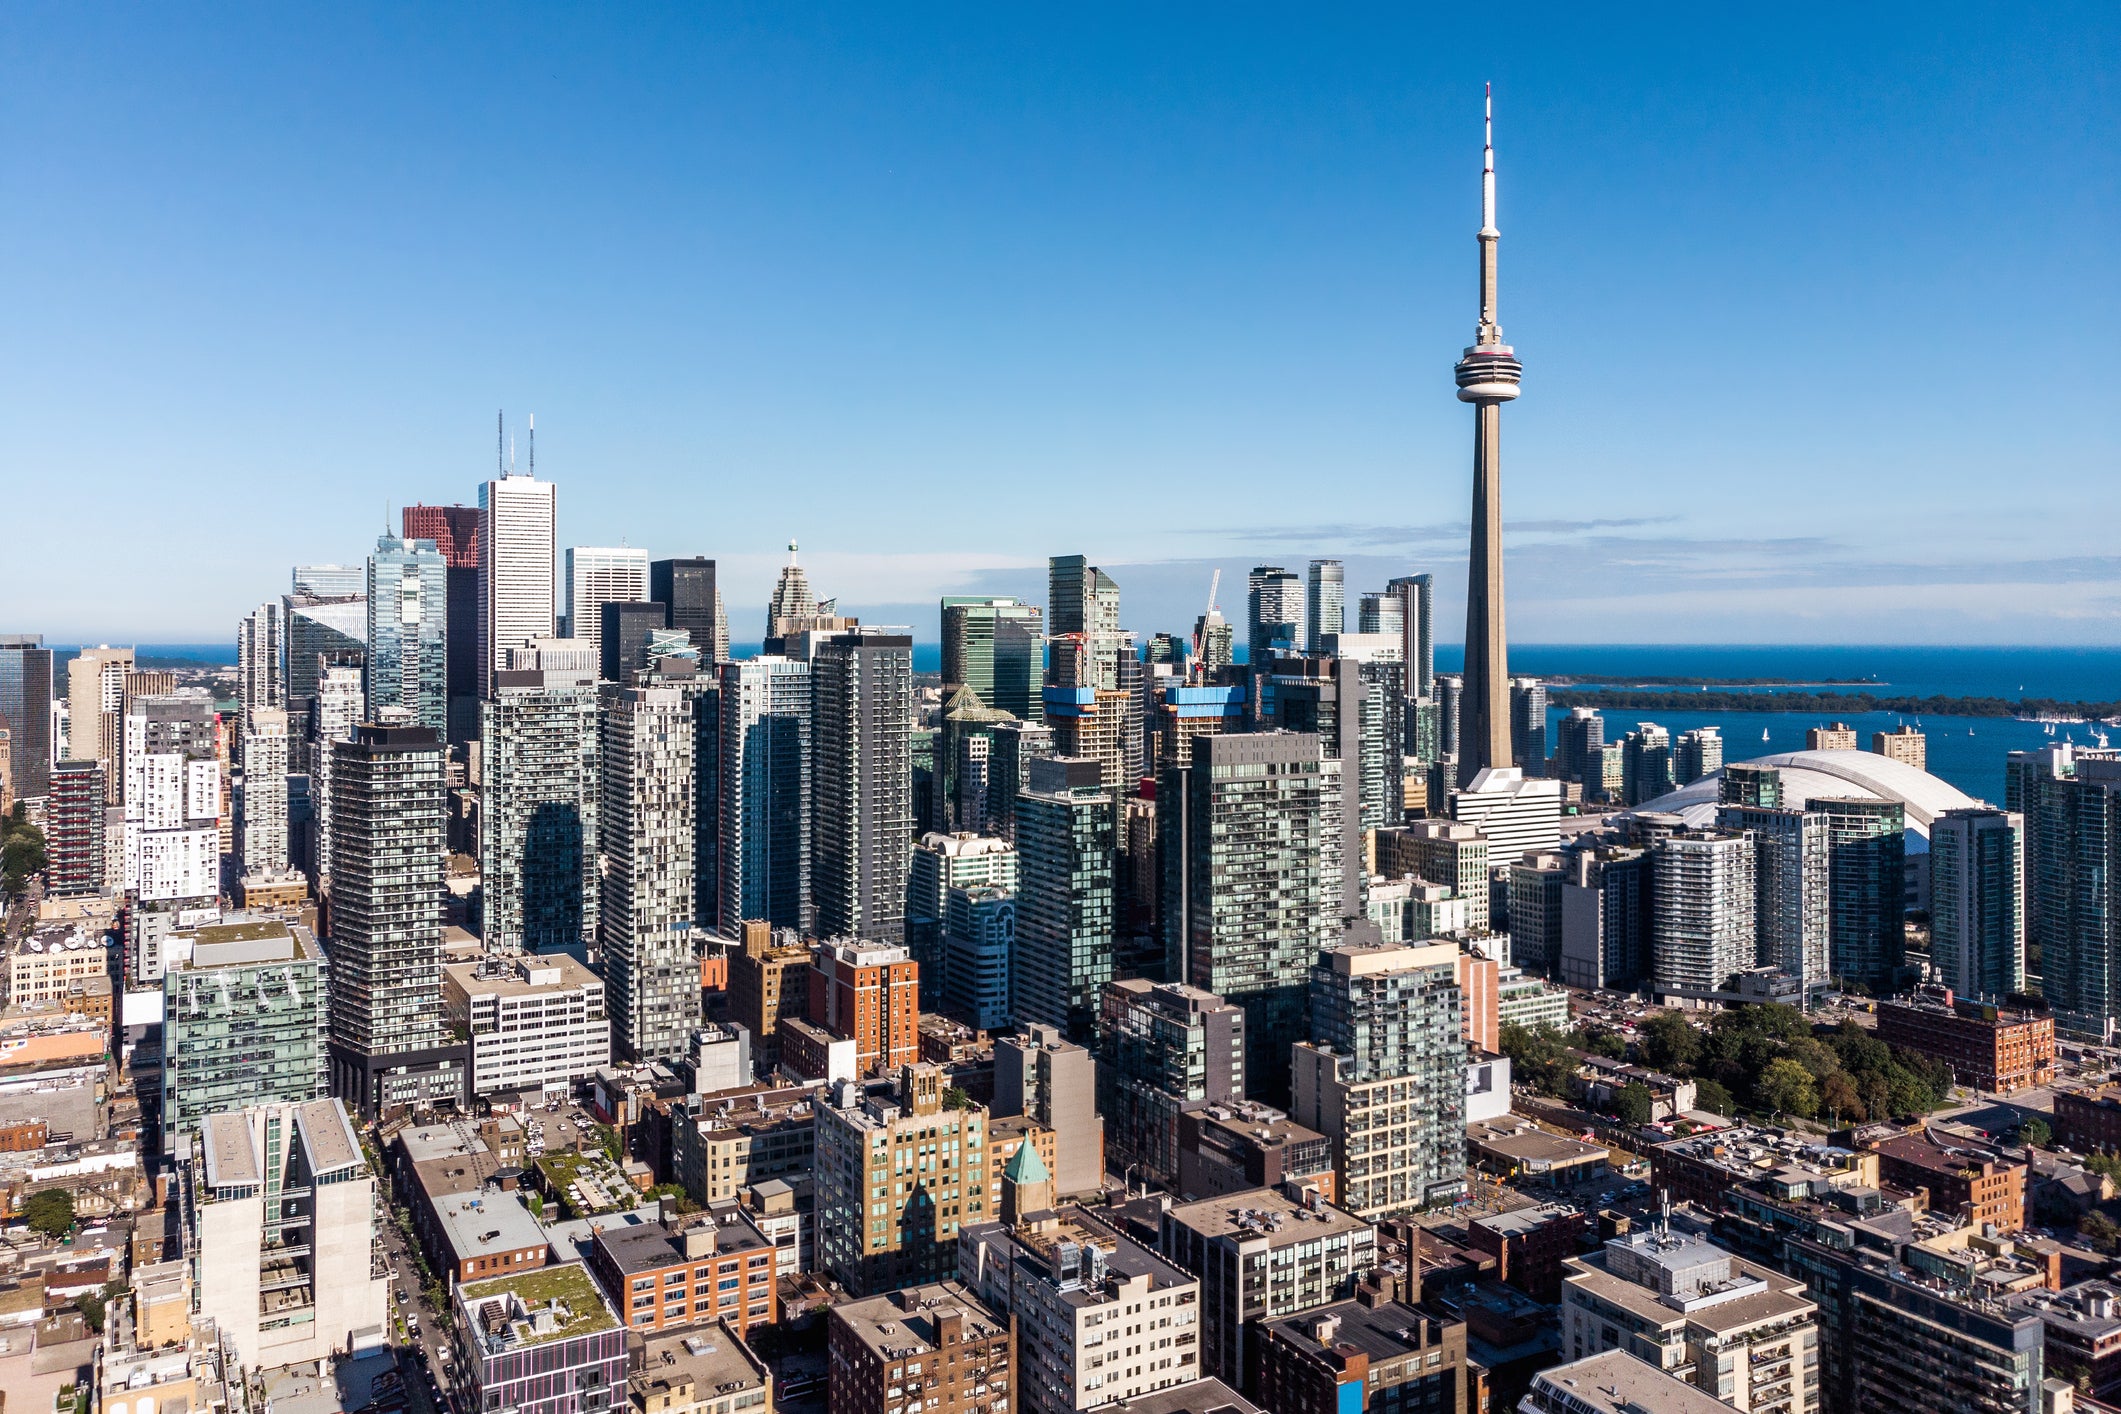 Toronto, Canada’s largest city, is shut to international visitors